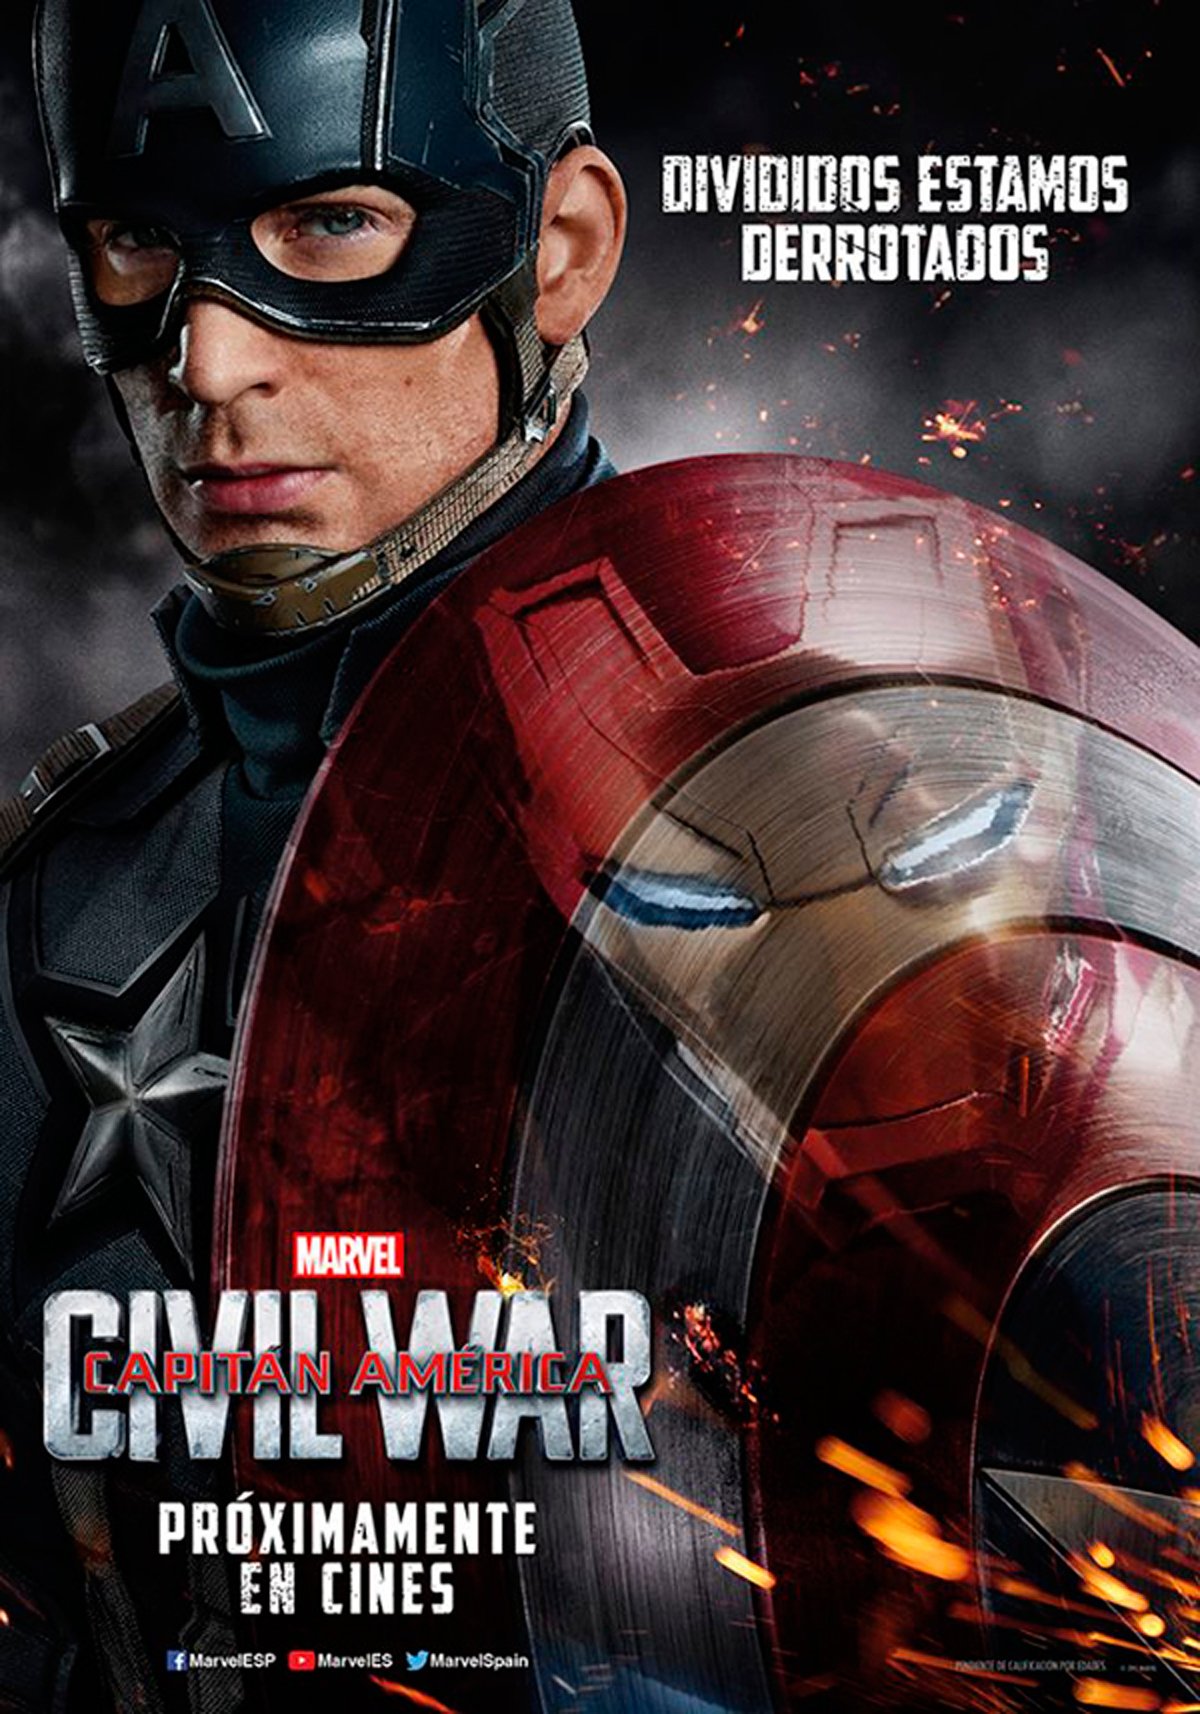 Cartel De La Película Capitán América Civil War Foto 60 Por Un Total De 72